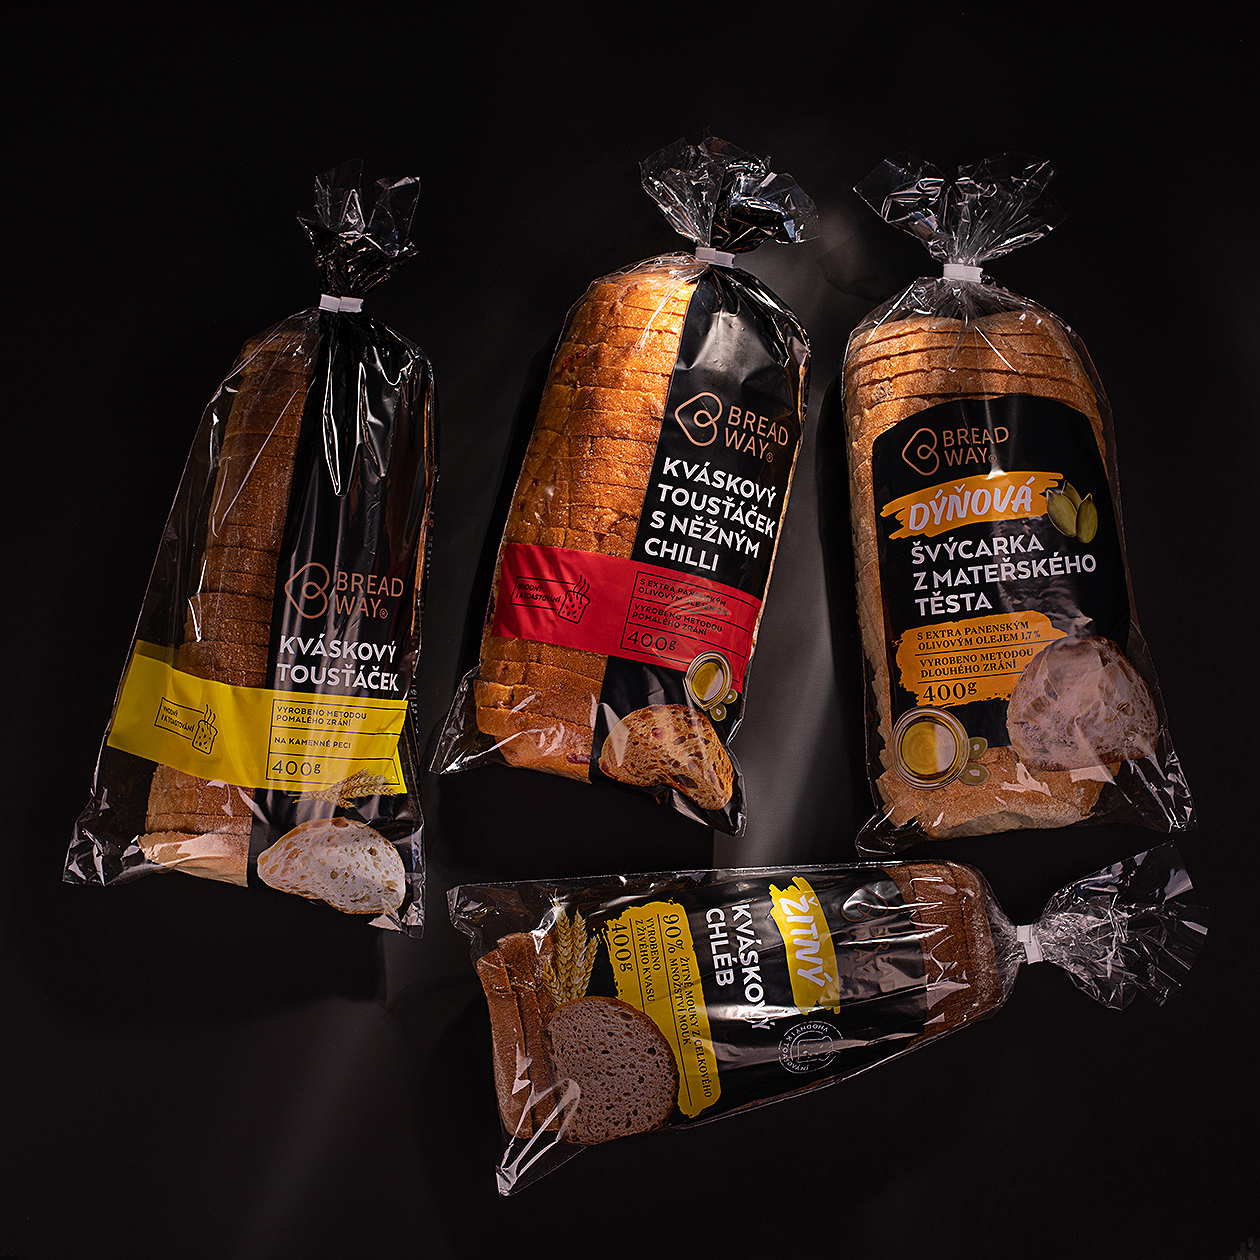 breadway packaging